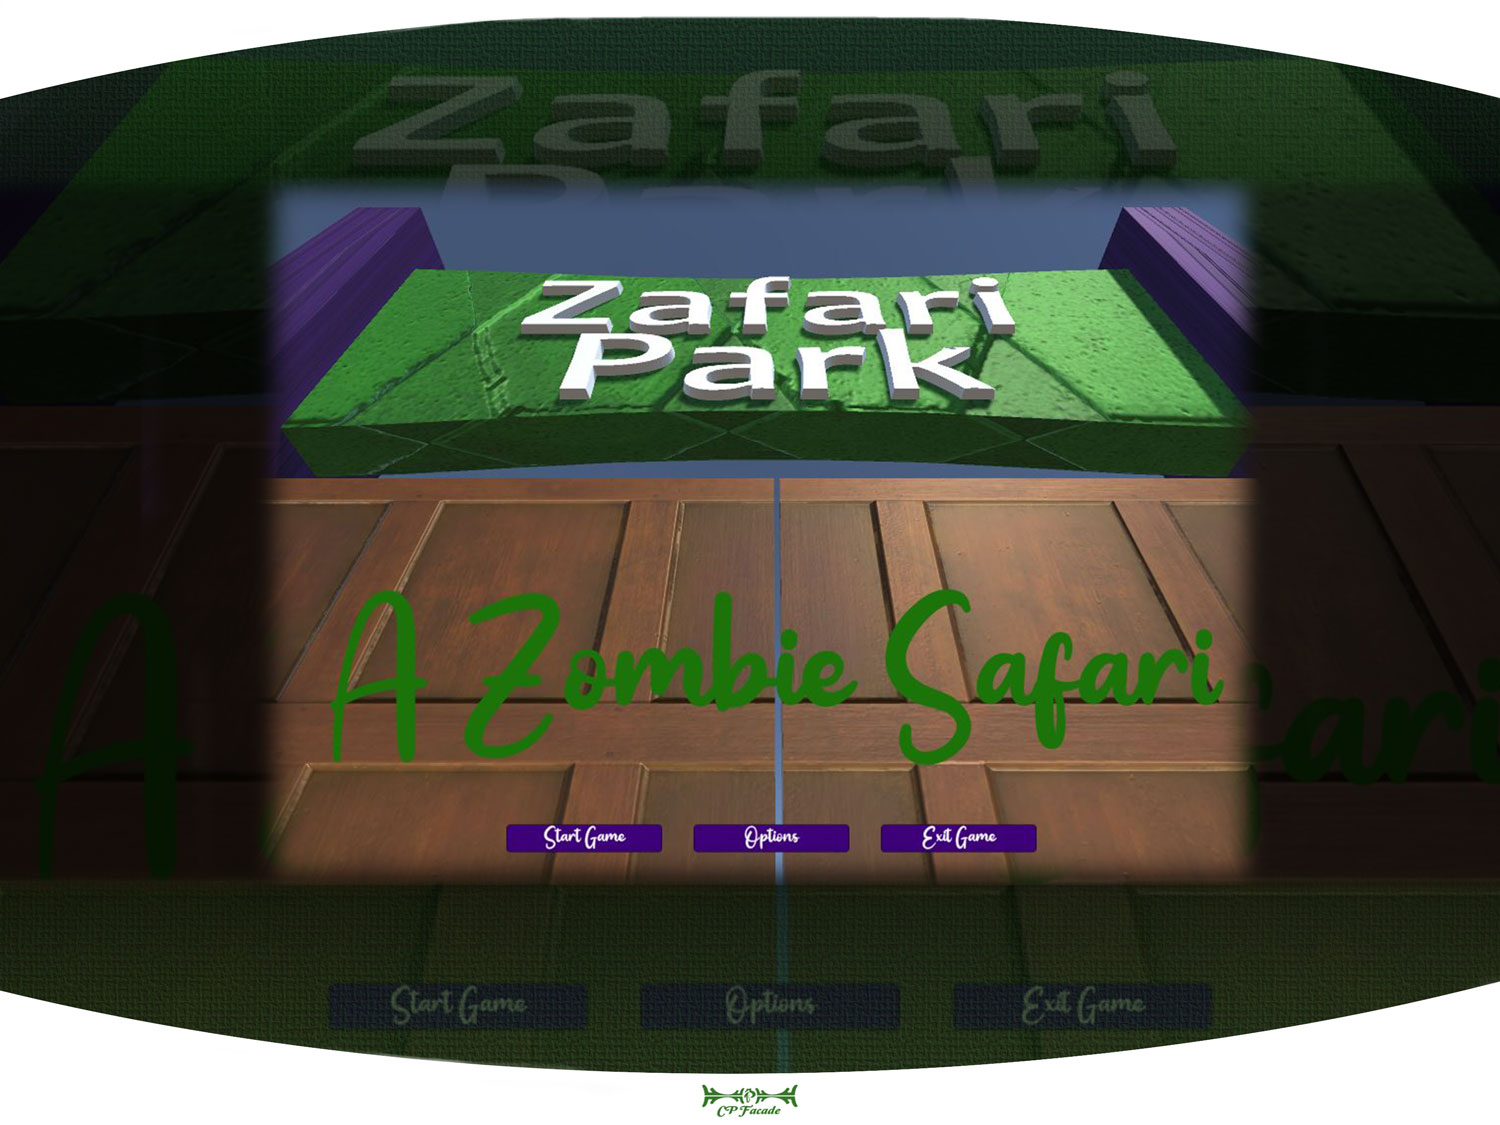 PC Game Zafari park mainmenu